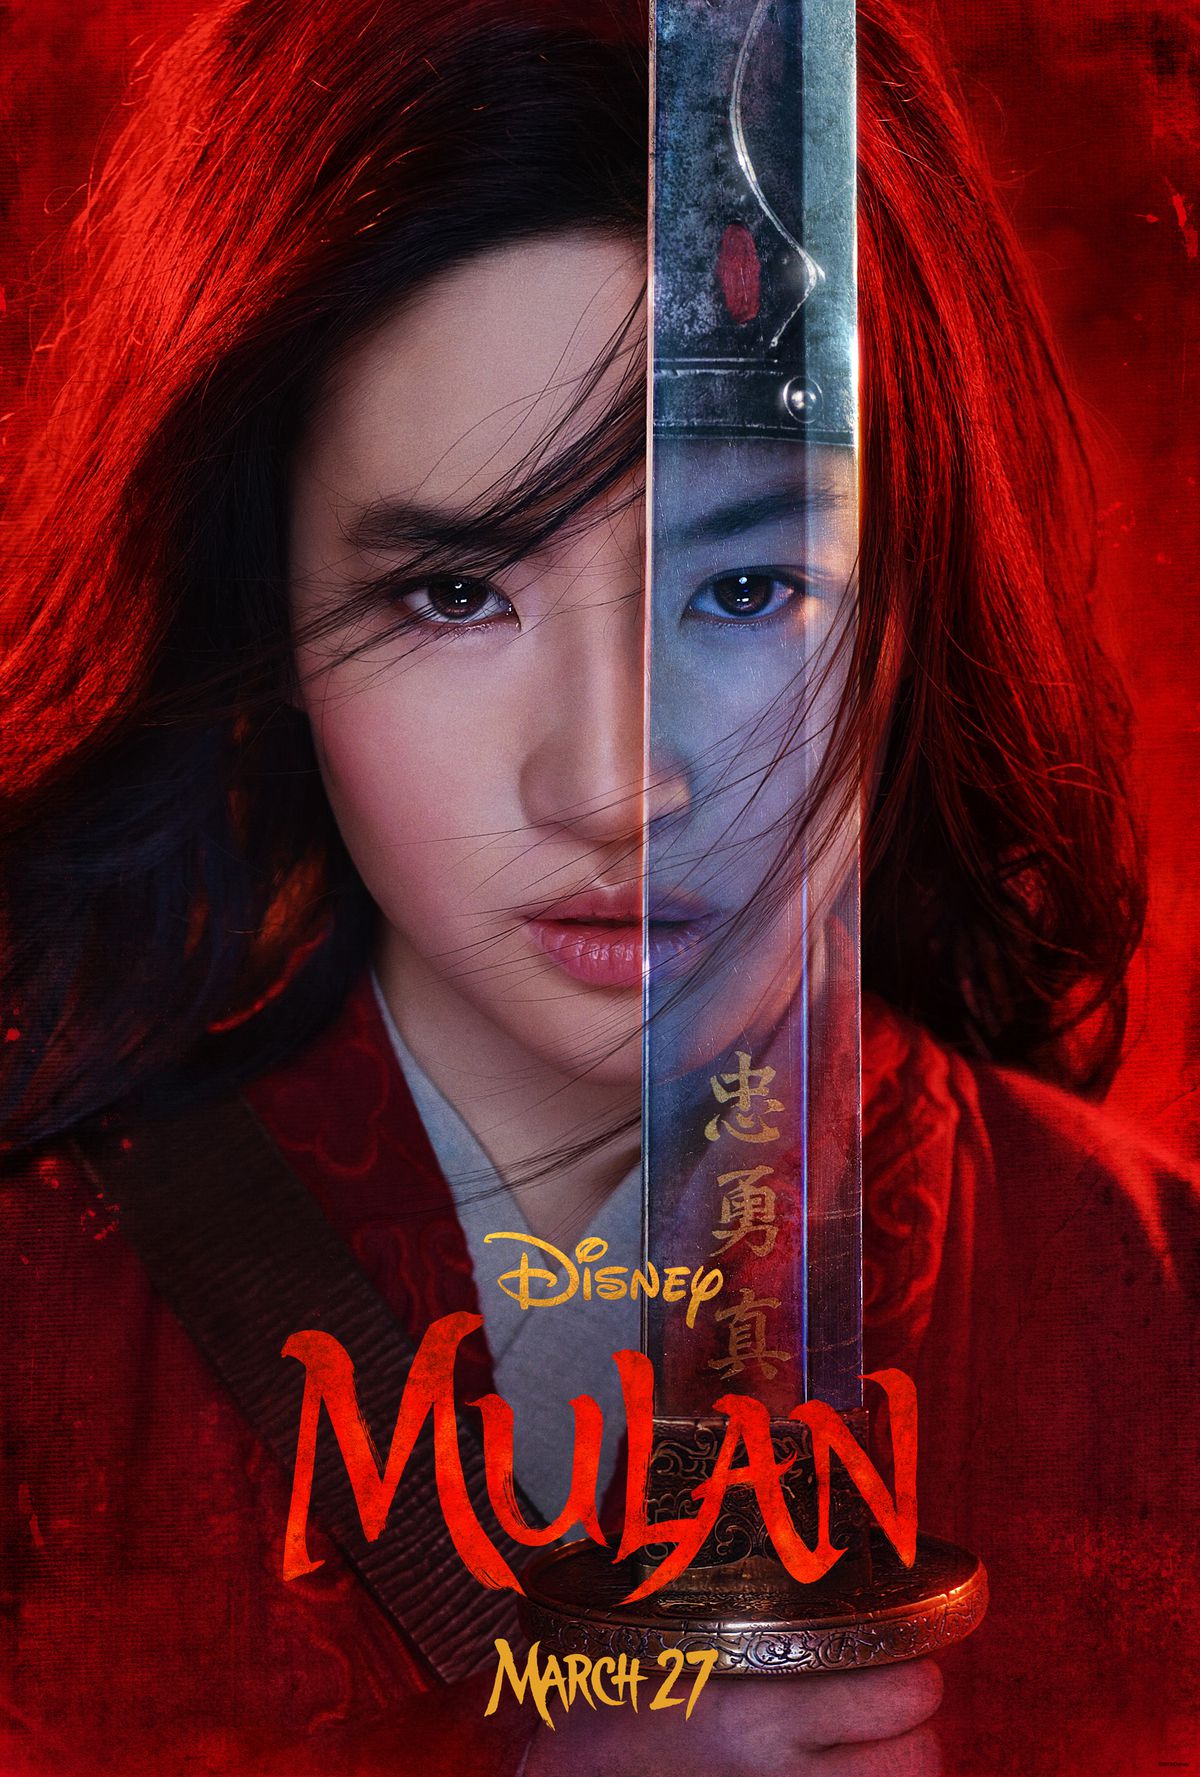 Disneys live action Mulan trailer reveals a martial arts